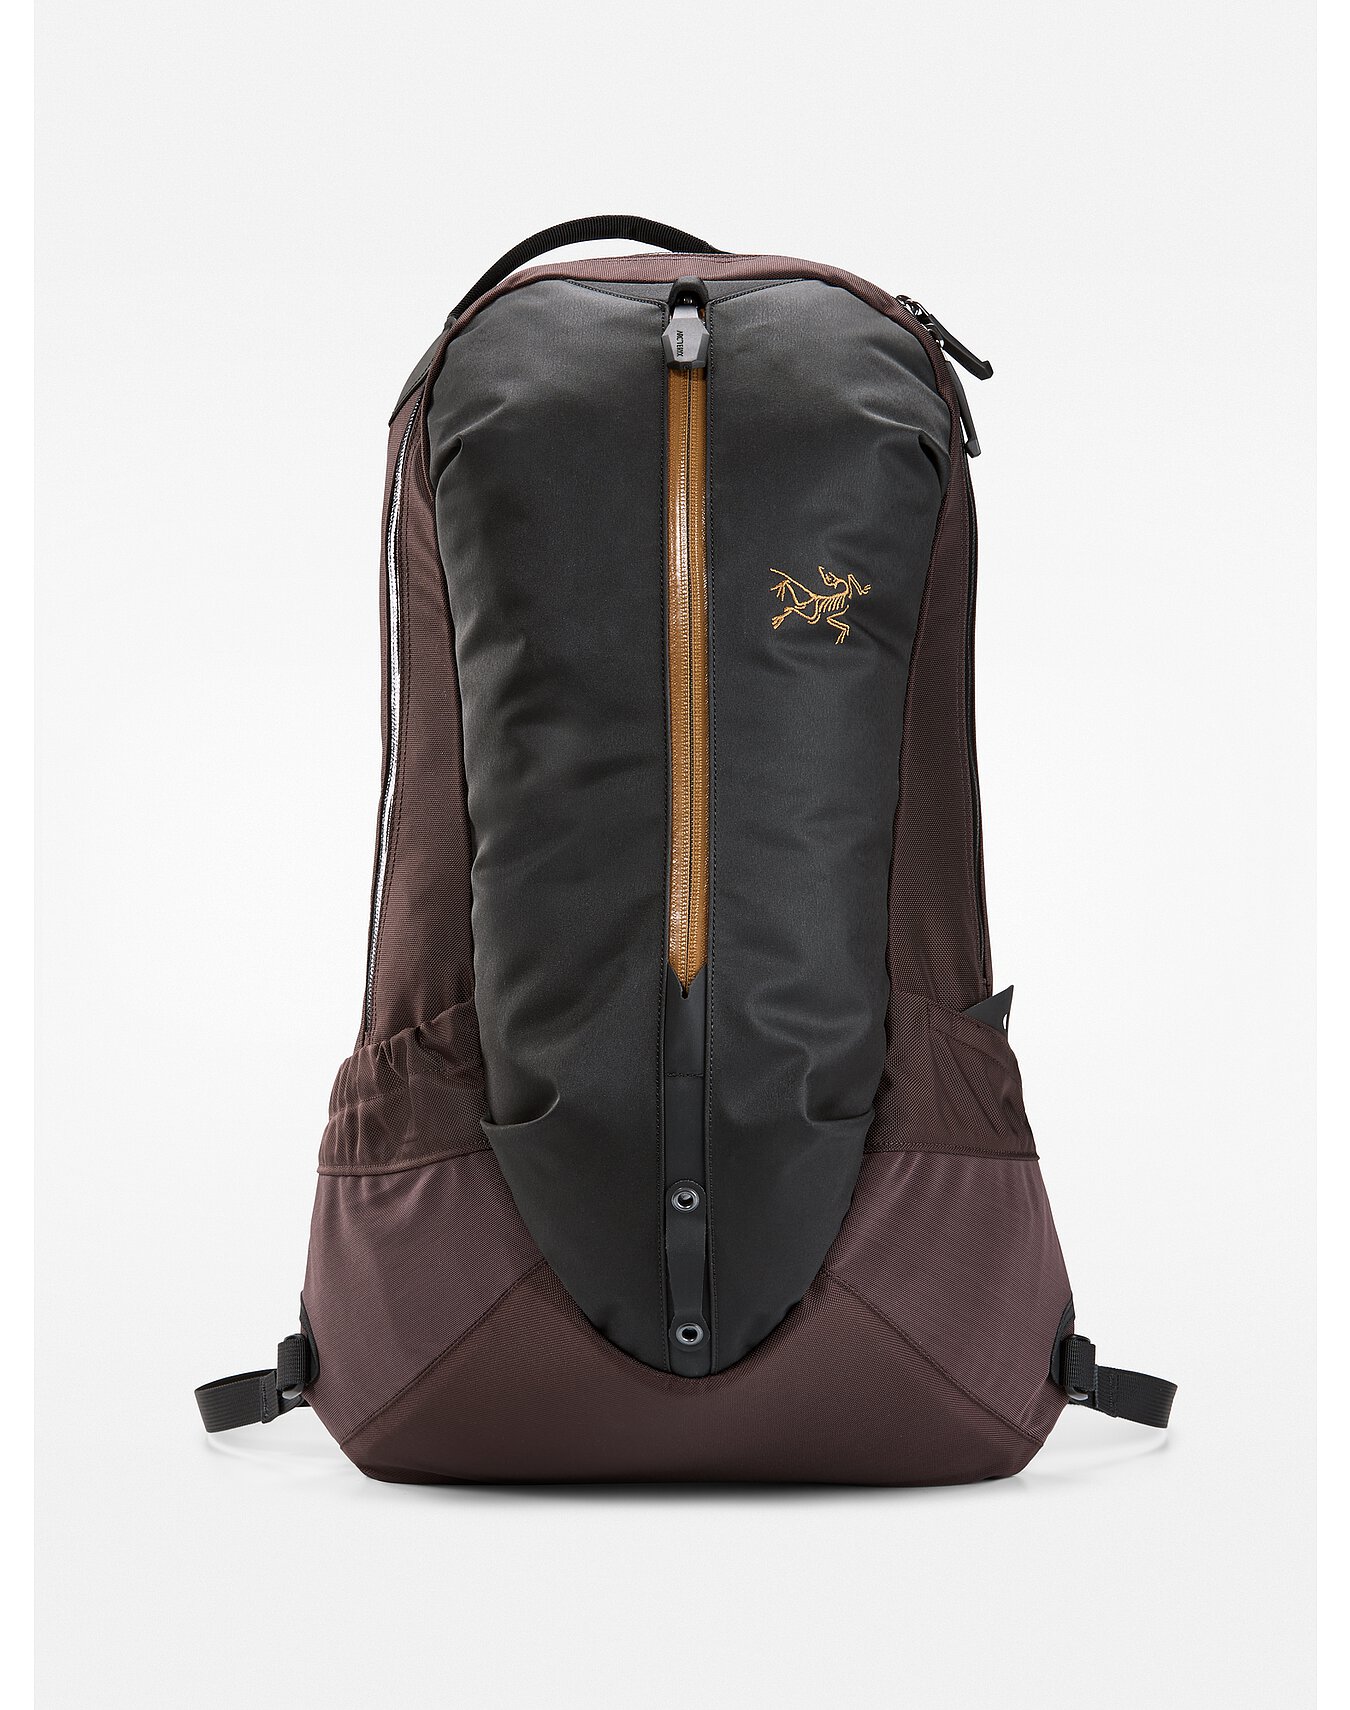 Arro 22 Backpack | Arc'teryx Outlet